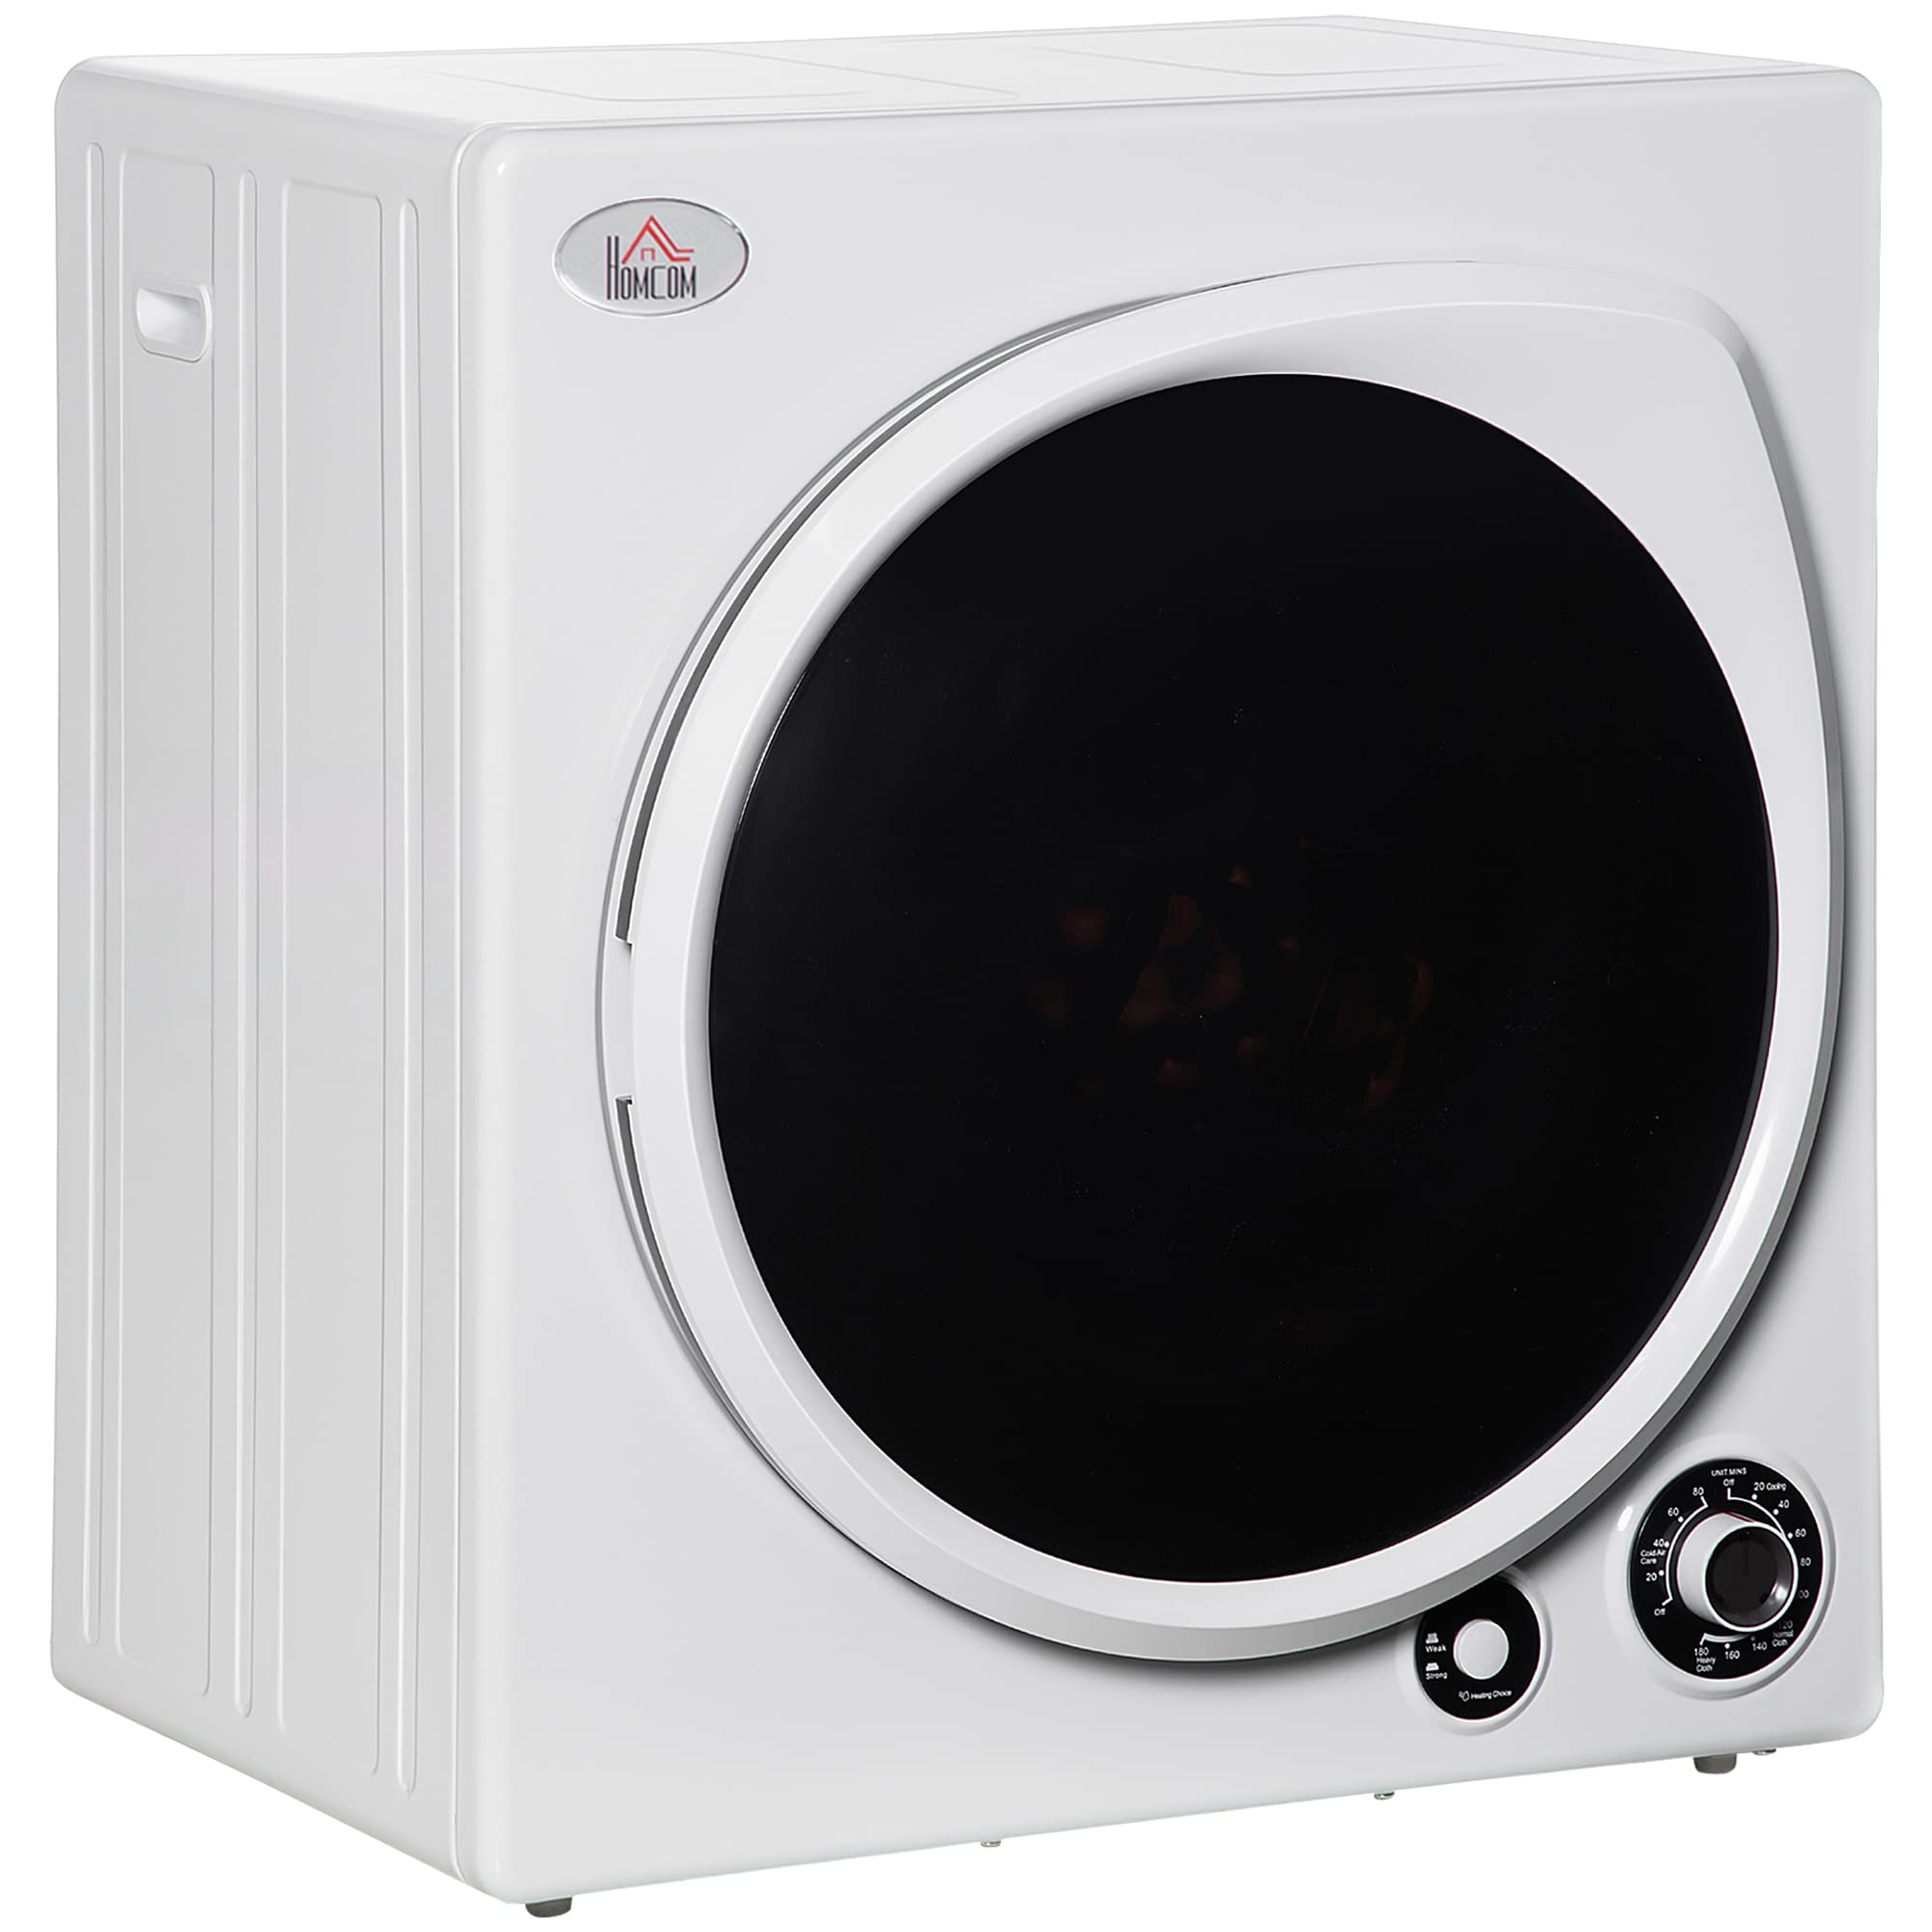 HomCom 自动烘干机，1350W 3.22 Cu。英尺。便携式干衣机，带 5 种烘干模式和不锈钢浴缸，适用...